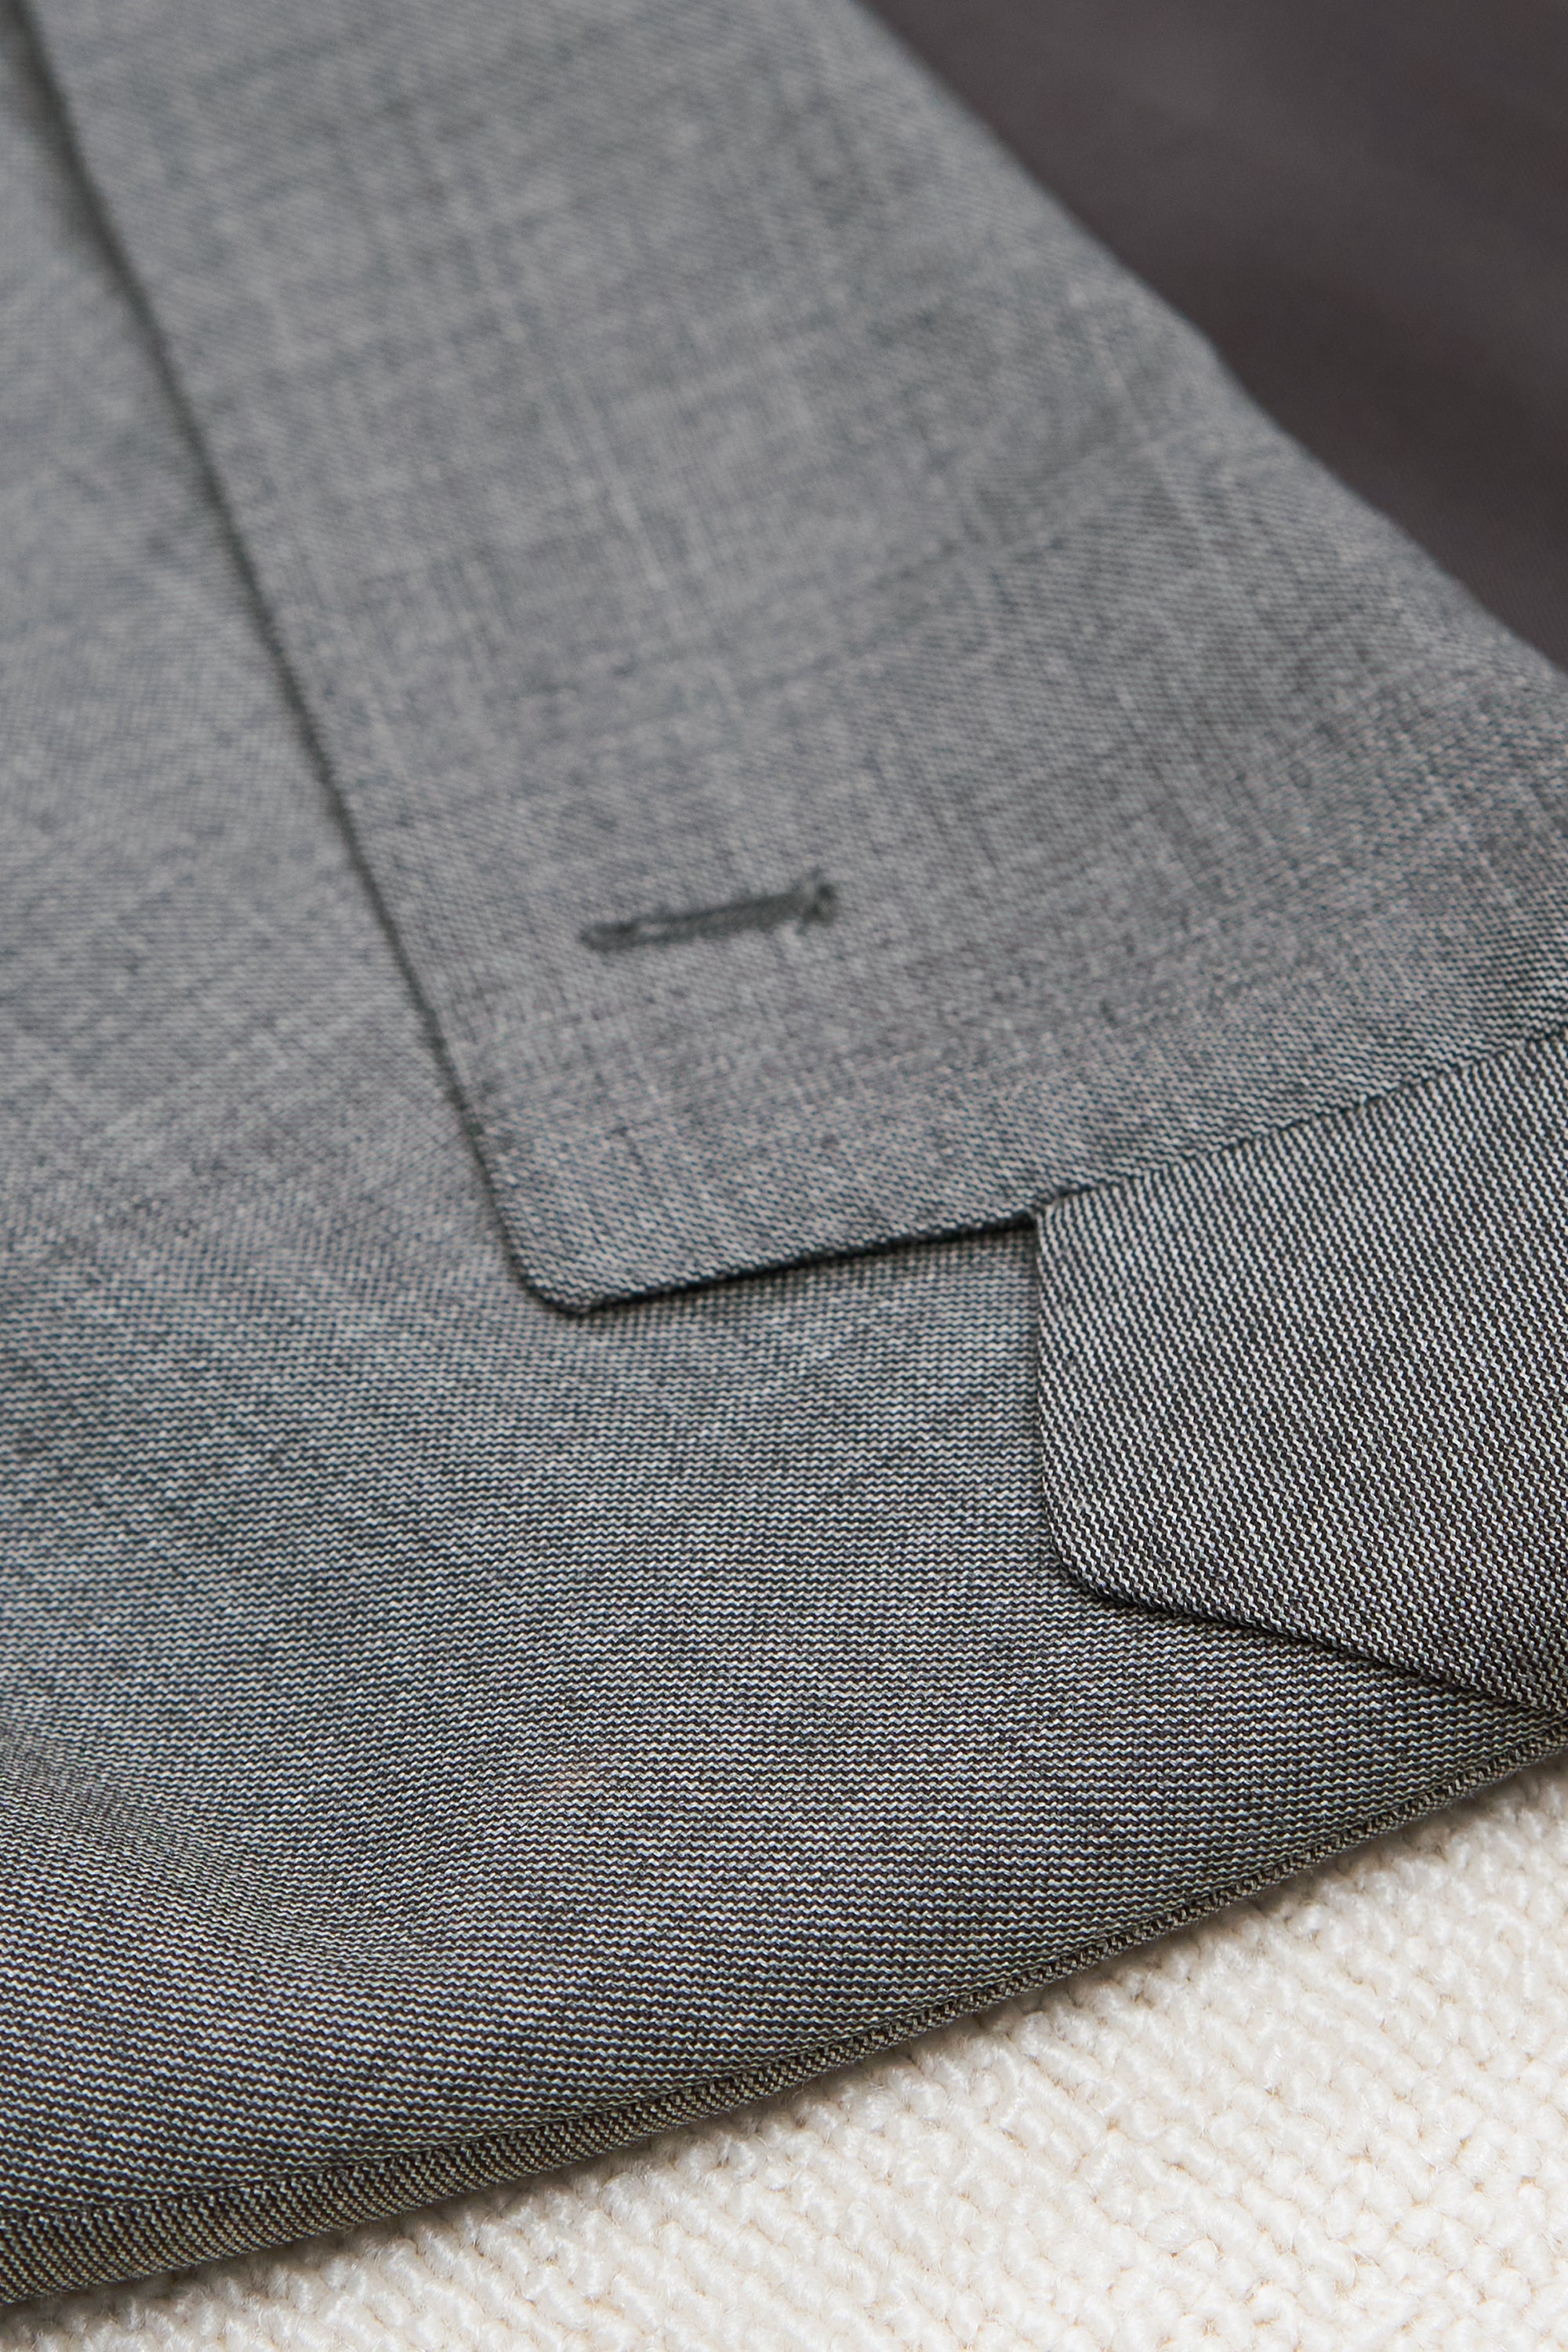 Ring Jacket 184 Grey Shark Skin Wool Suit